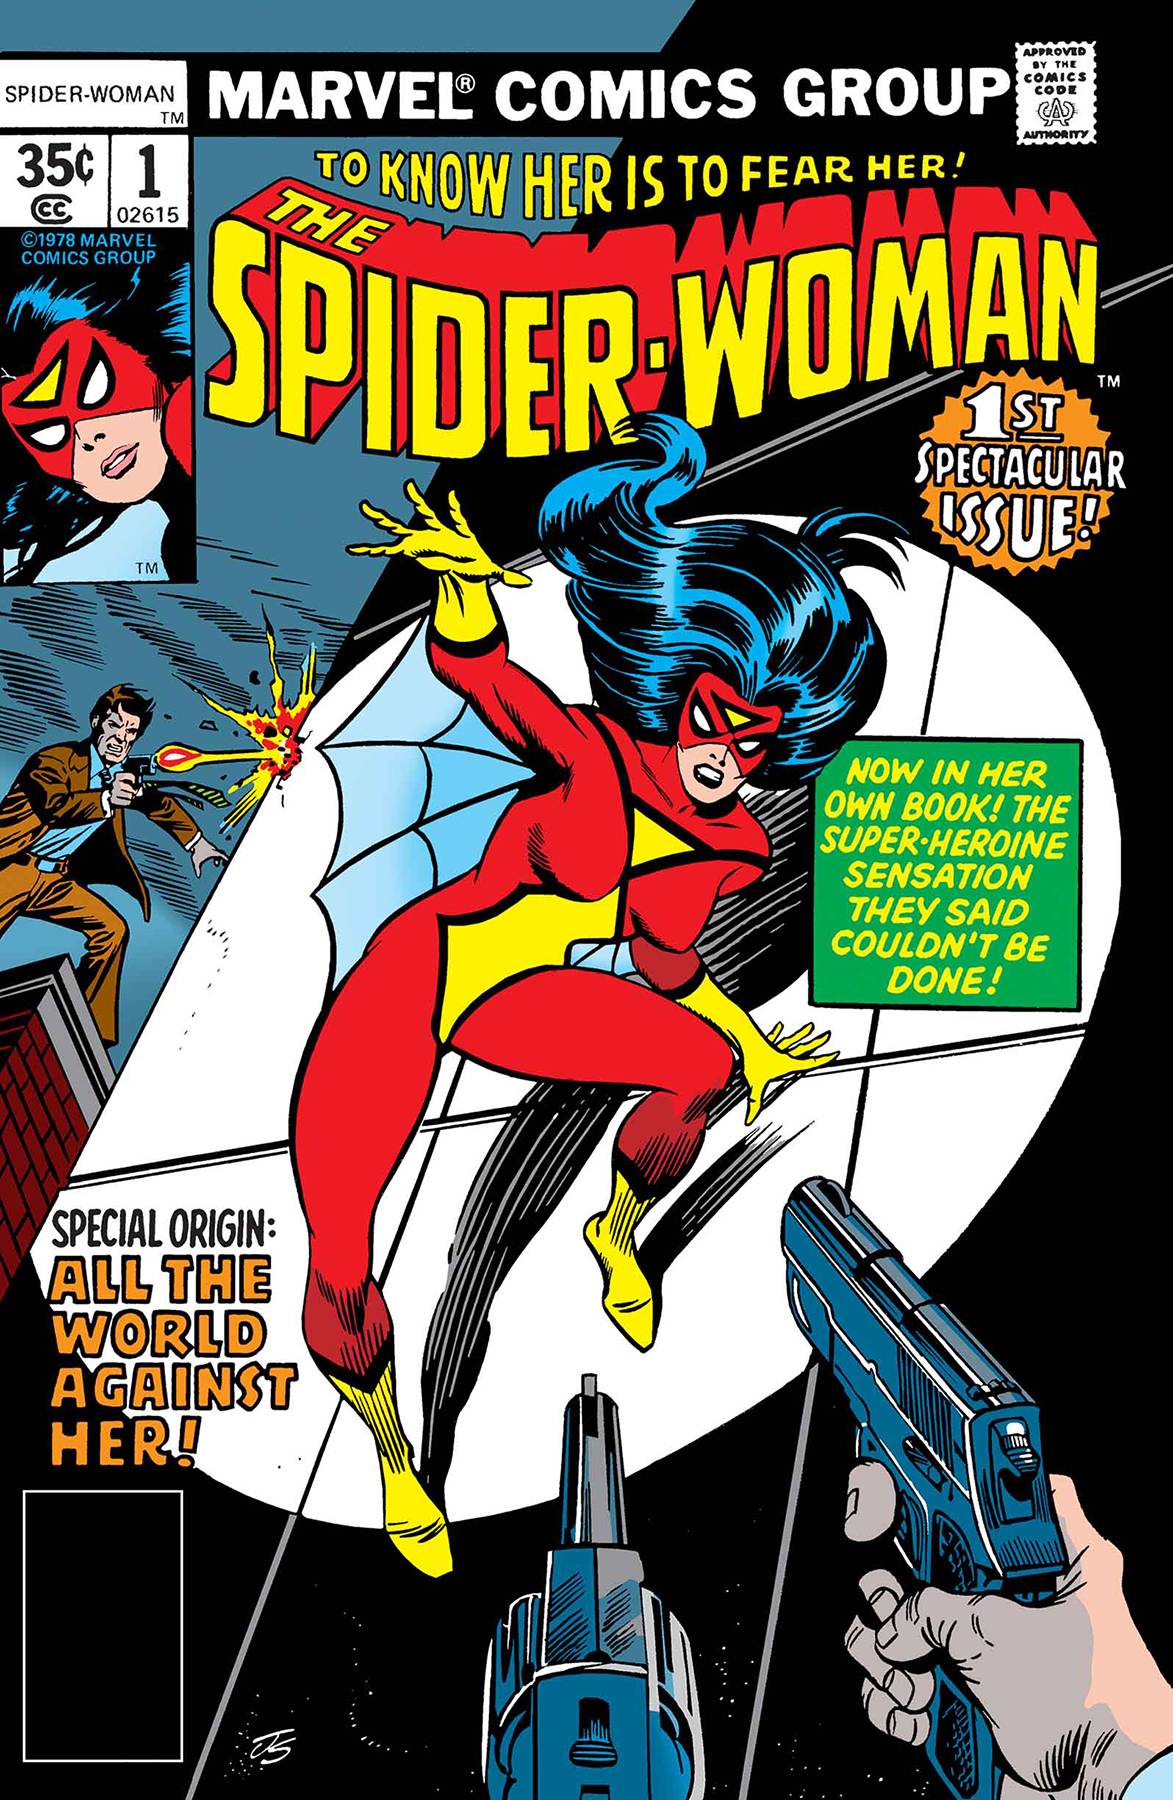 SPIDER-WOMAN #1 FACSIMILE EDITION